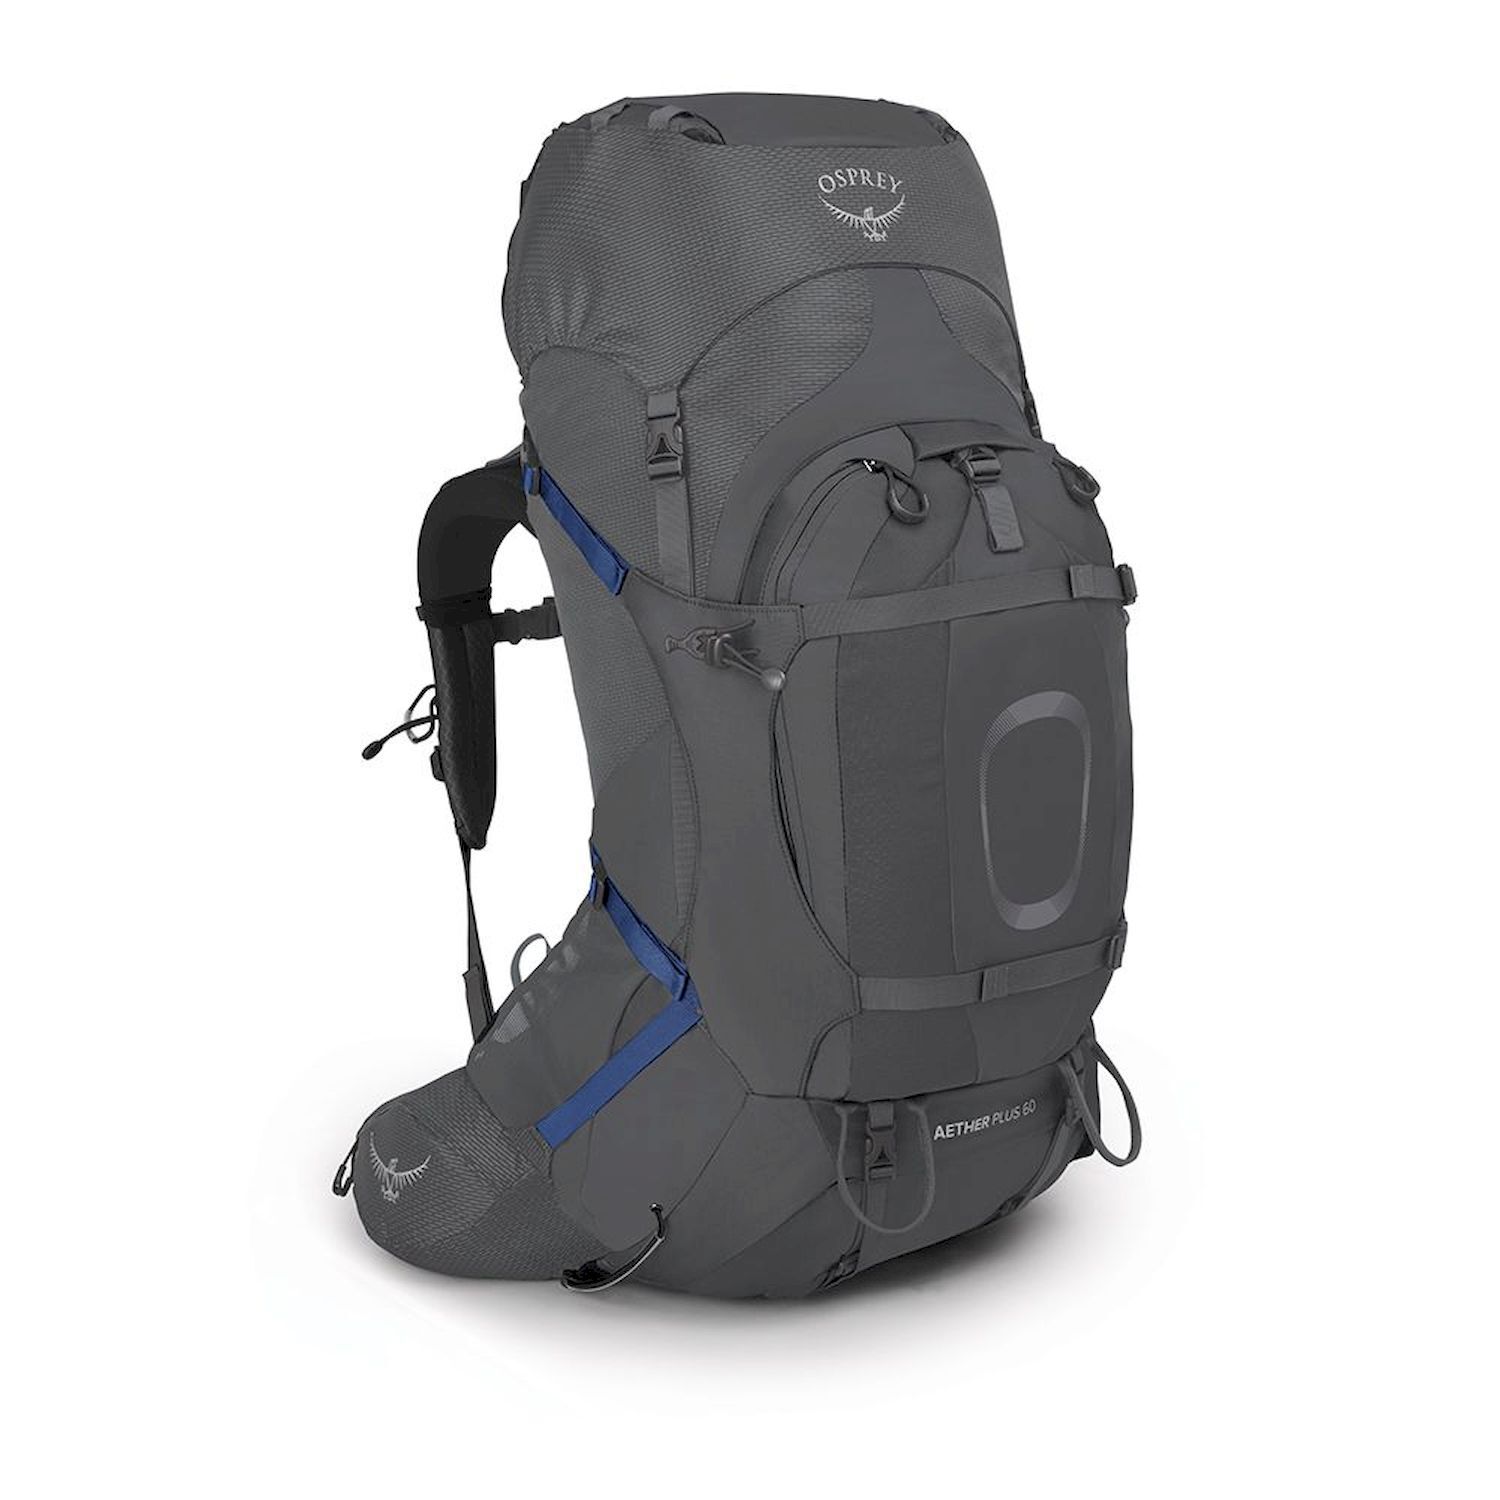 Osprey Aether Plus 60 - Hiking backpack - Men's